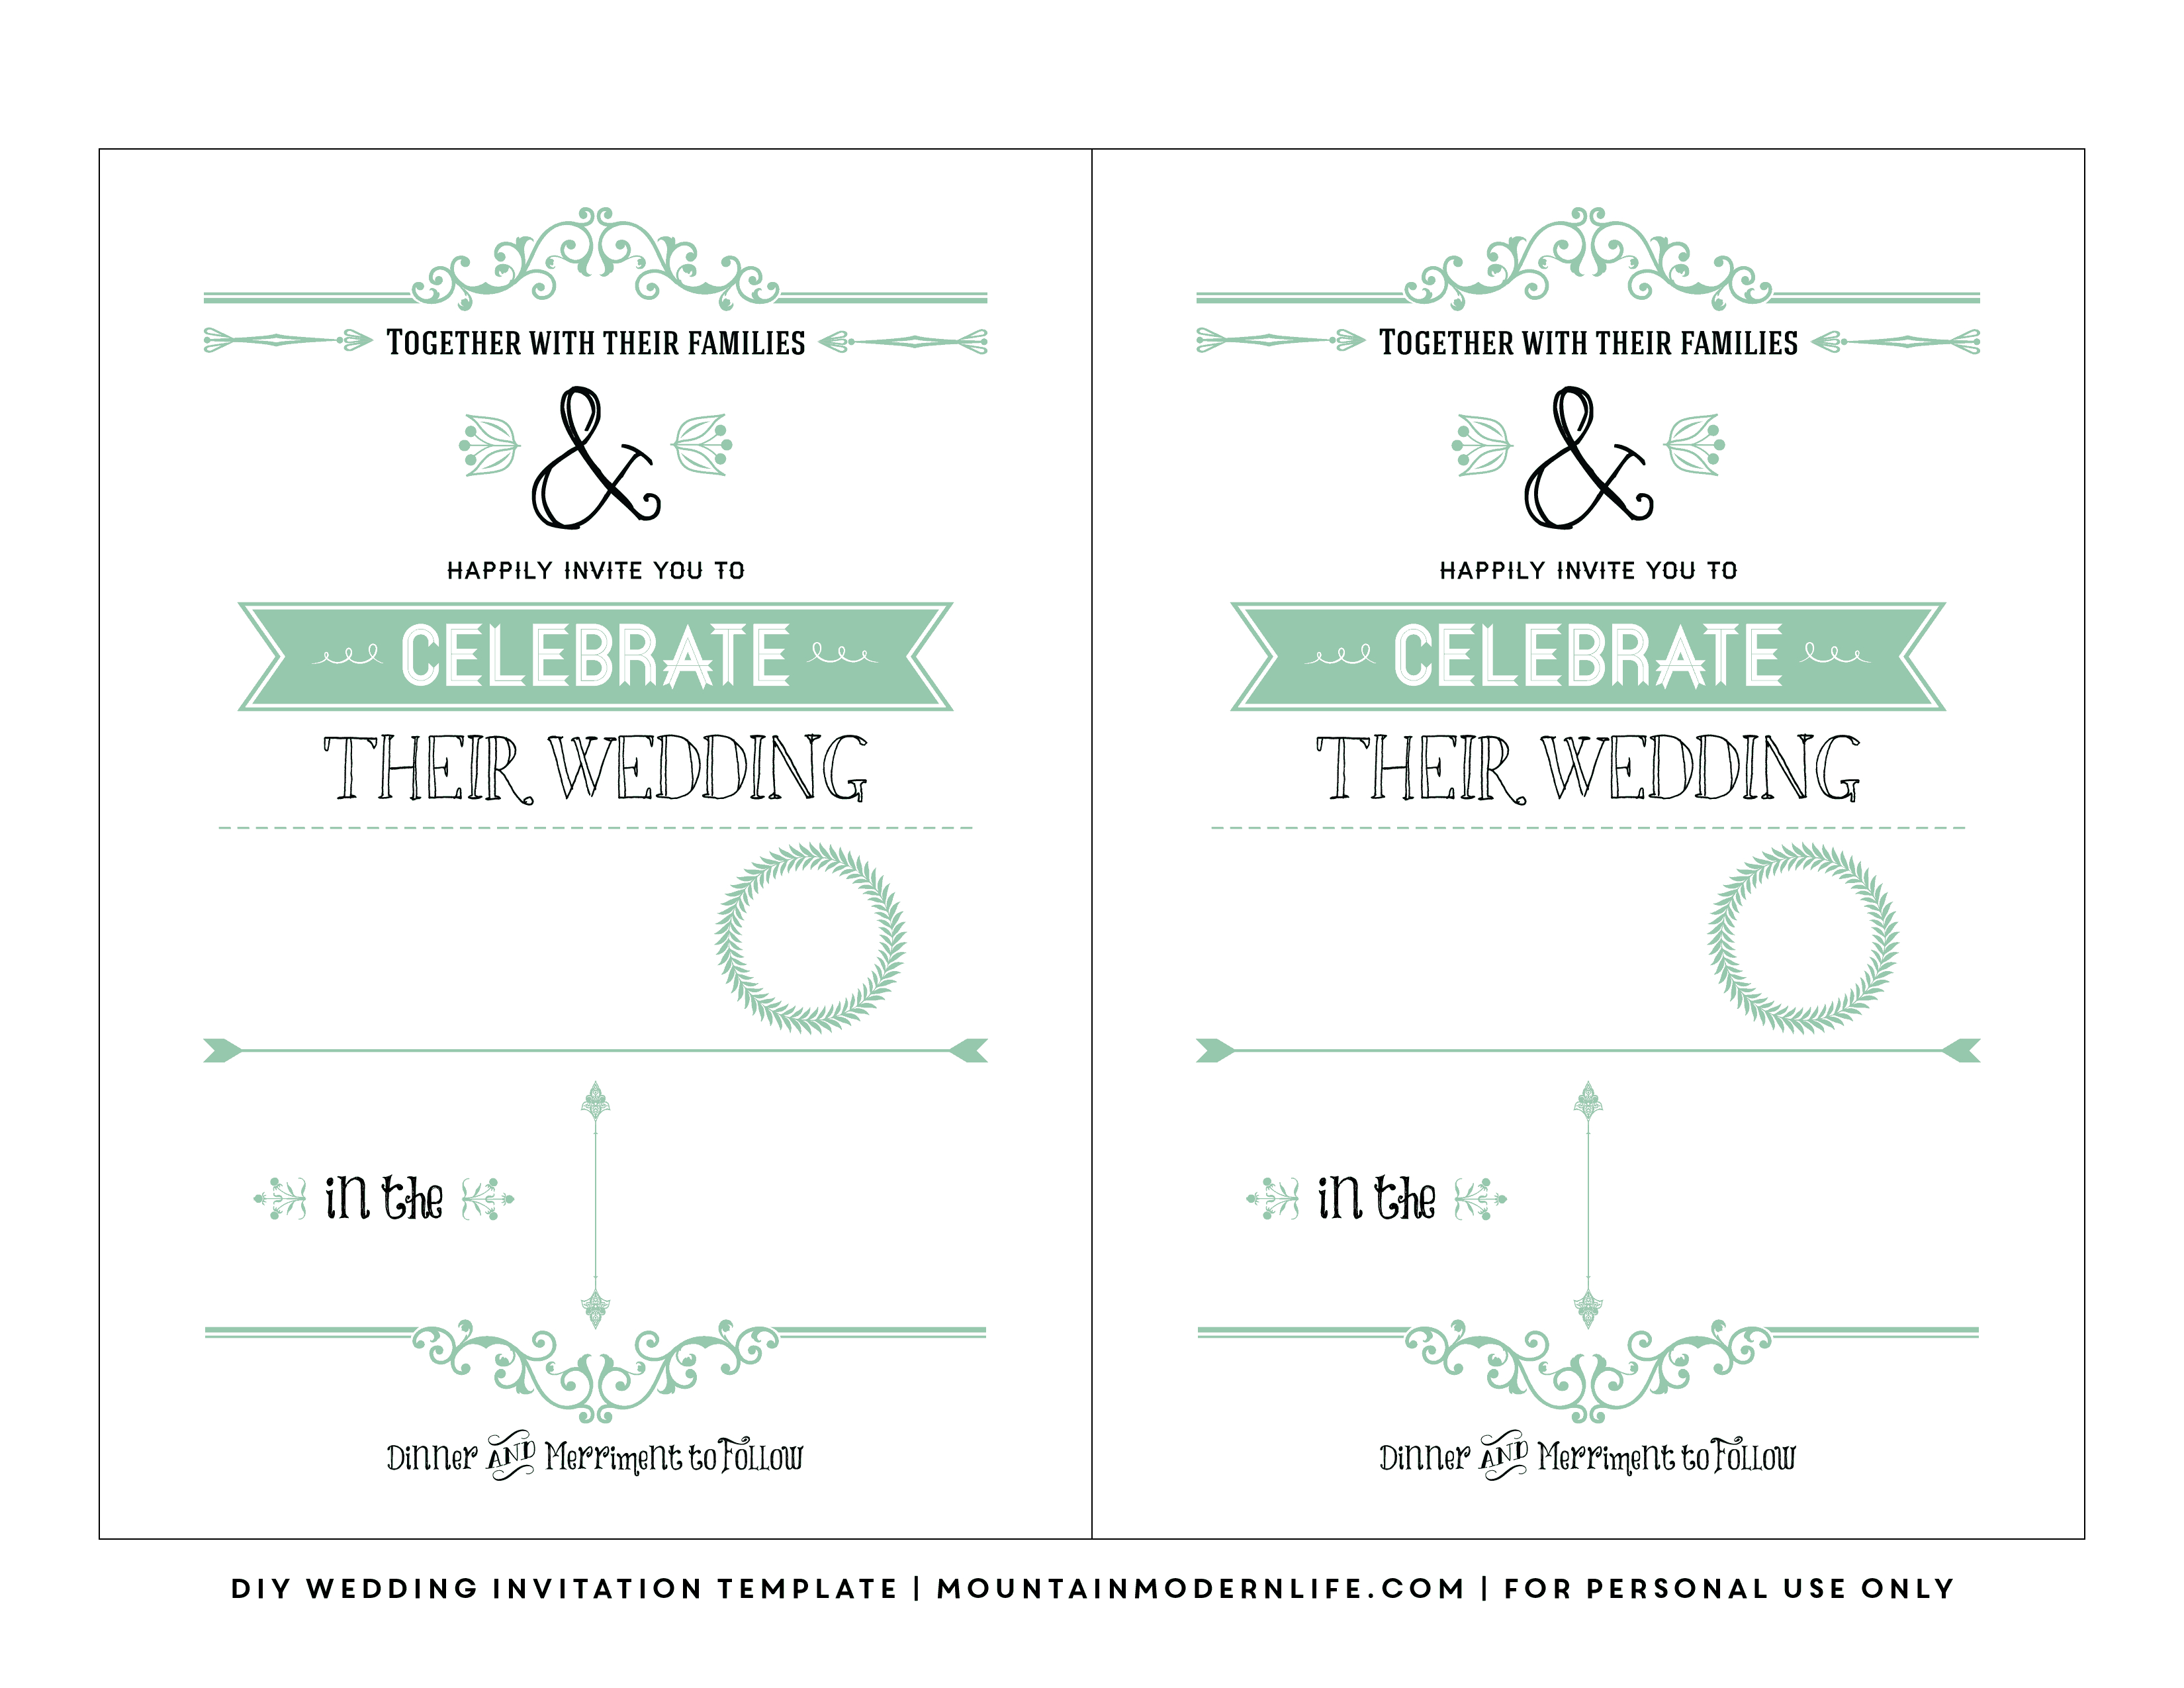 Free Wedding Invitation Template | Mountainmodernlife - Free Printable Wedding Invitations With Photo